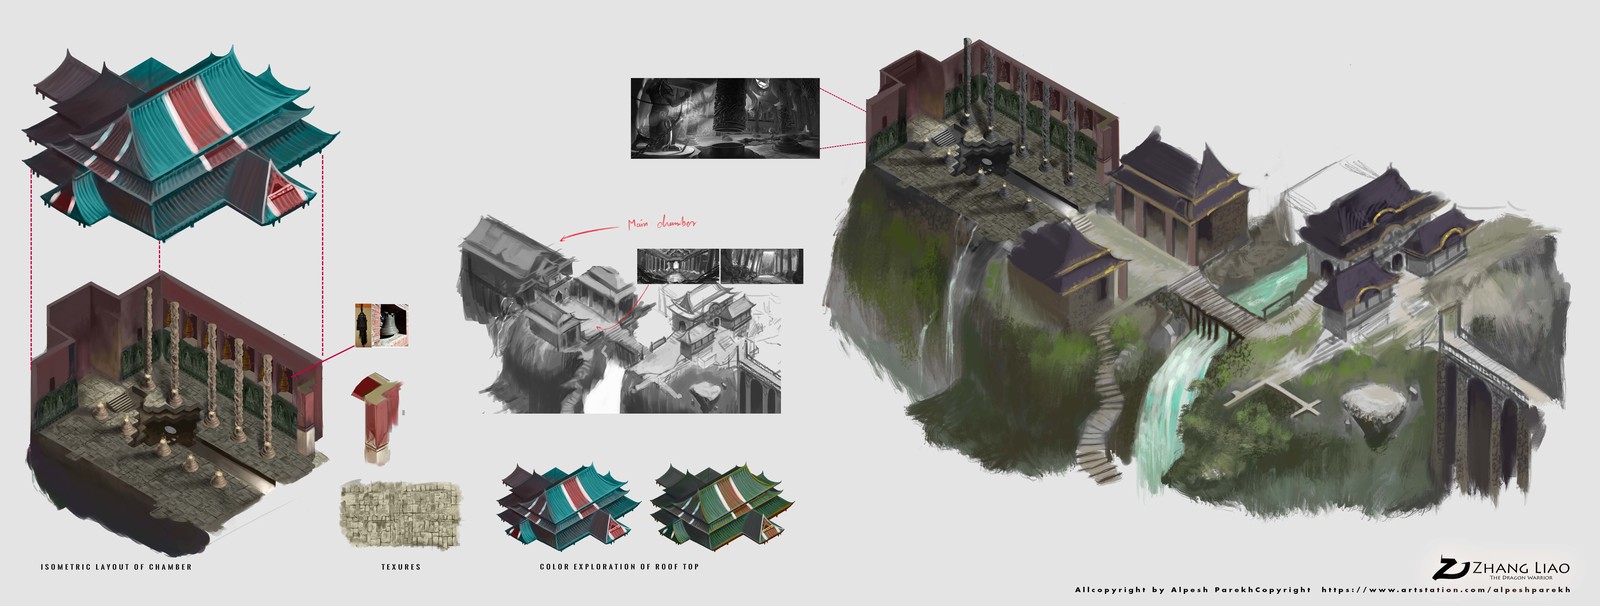 Zhang Liao- Level 2 abandoned chamber Iso layout and development 